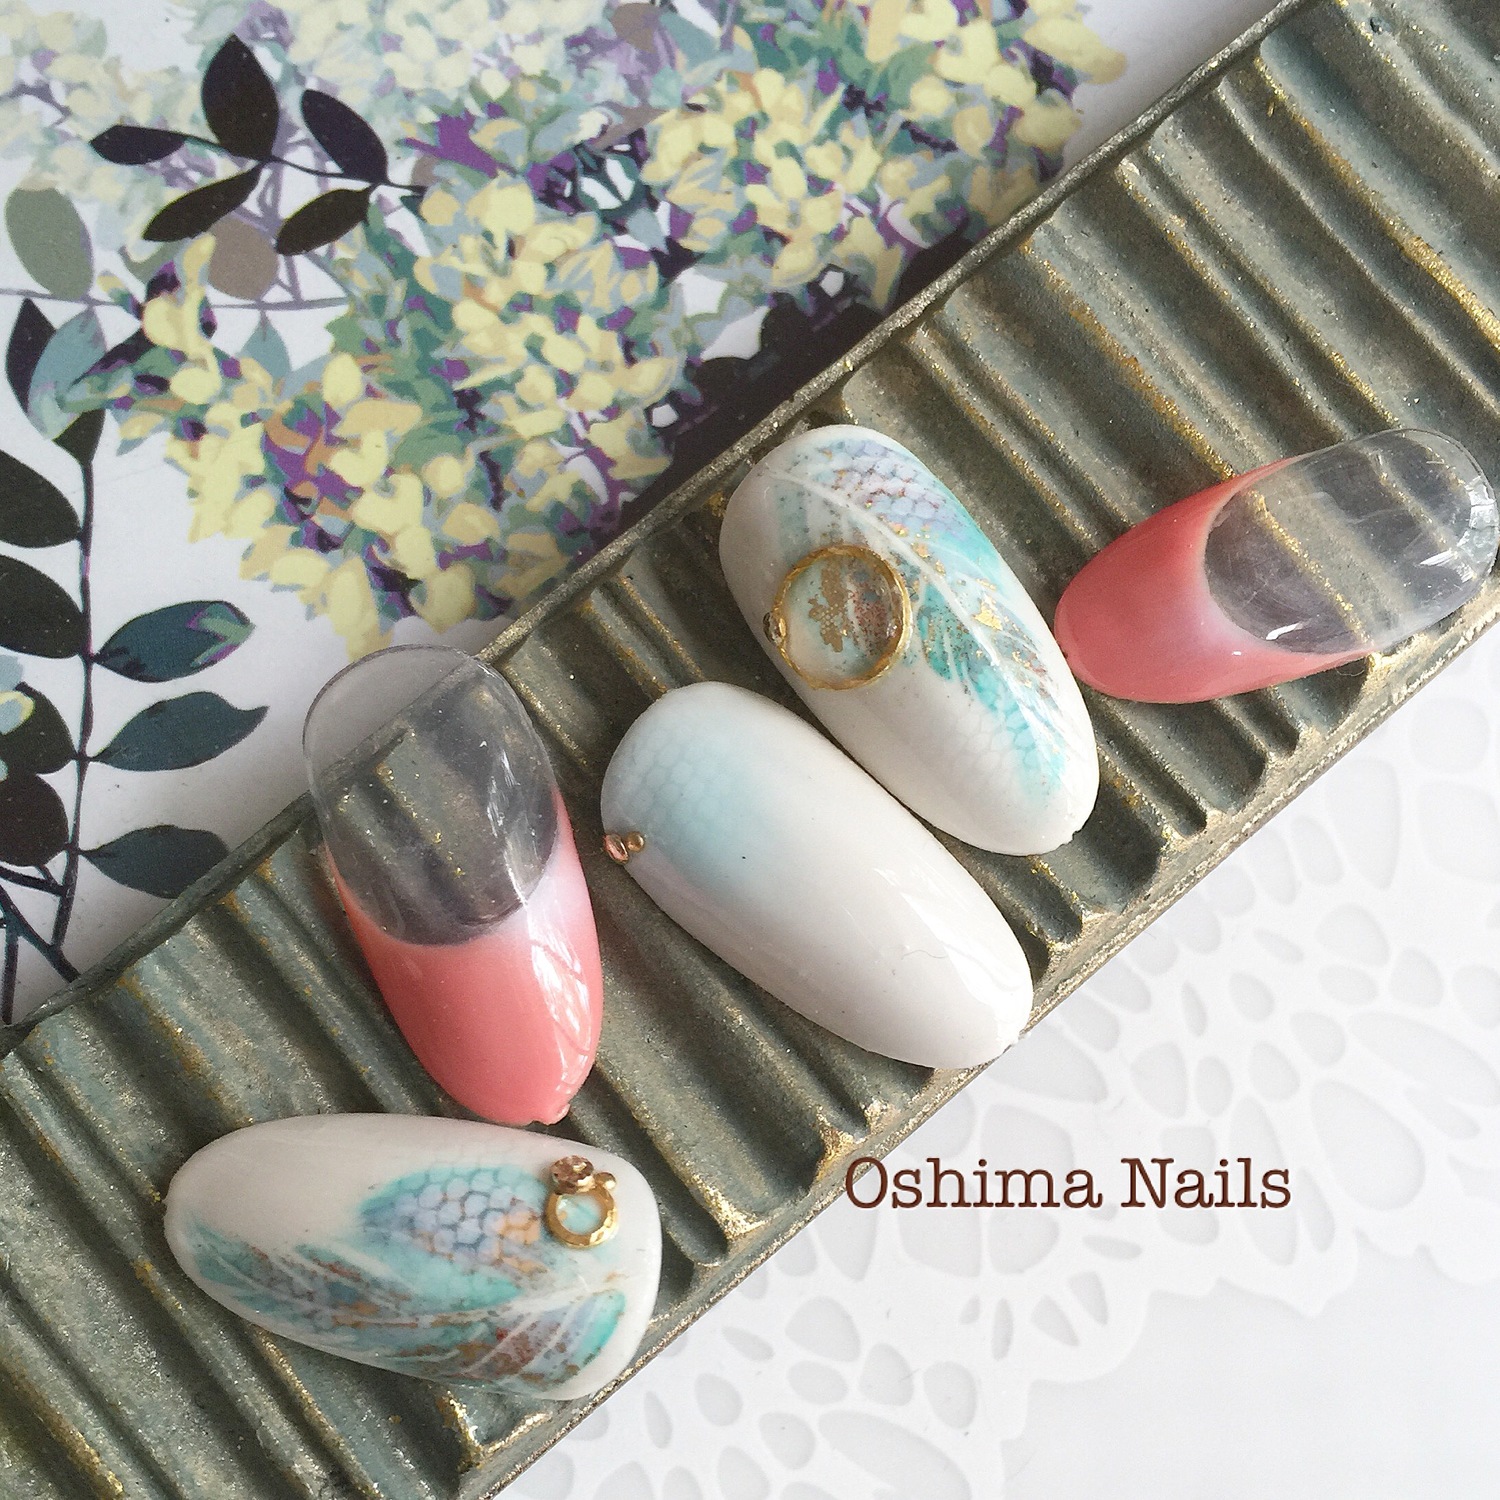 Oshima Beauty - Vancouver's Japanese Nail Art & Lashes Studio